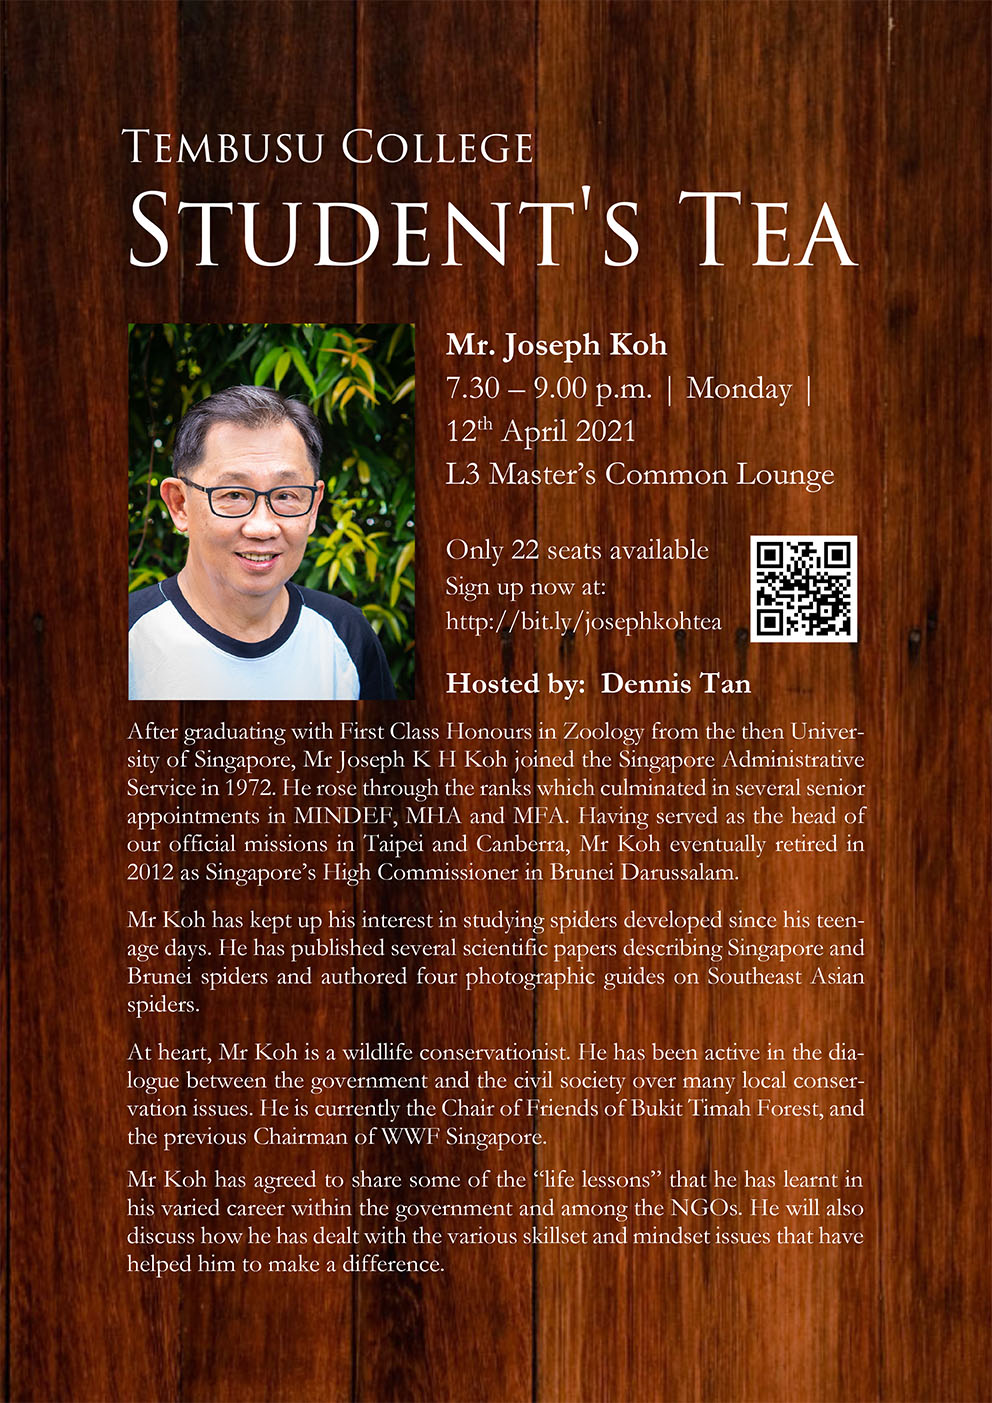 Microsoft Word - Student's Tea (Joseph) Poster.docx